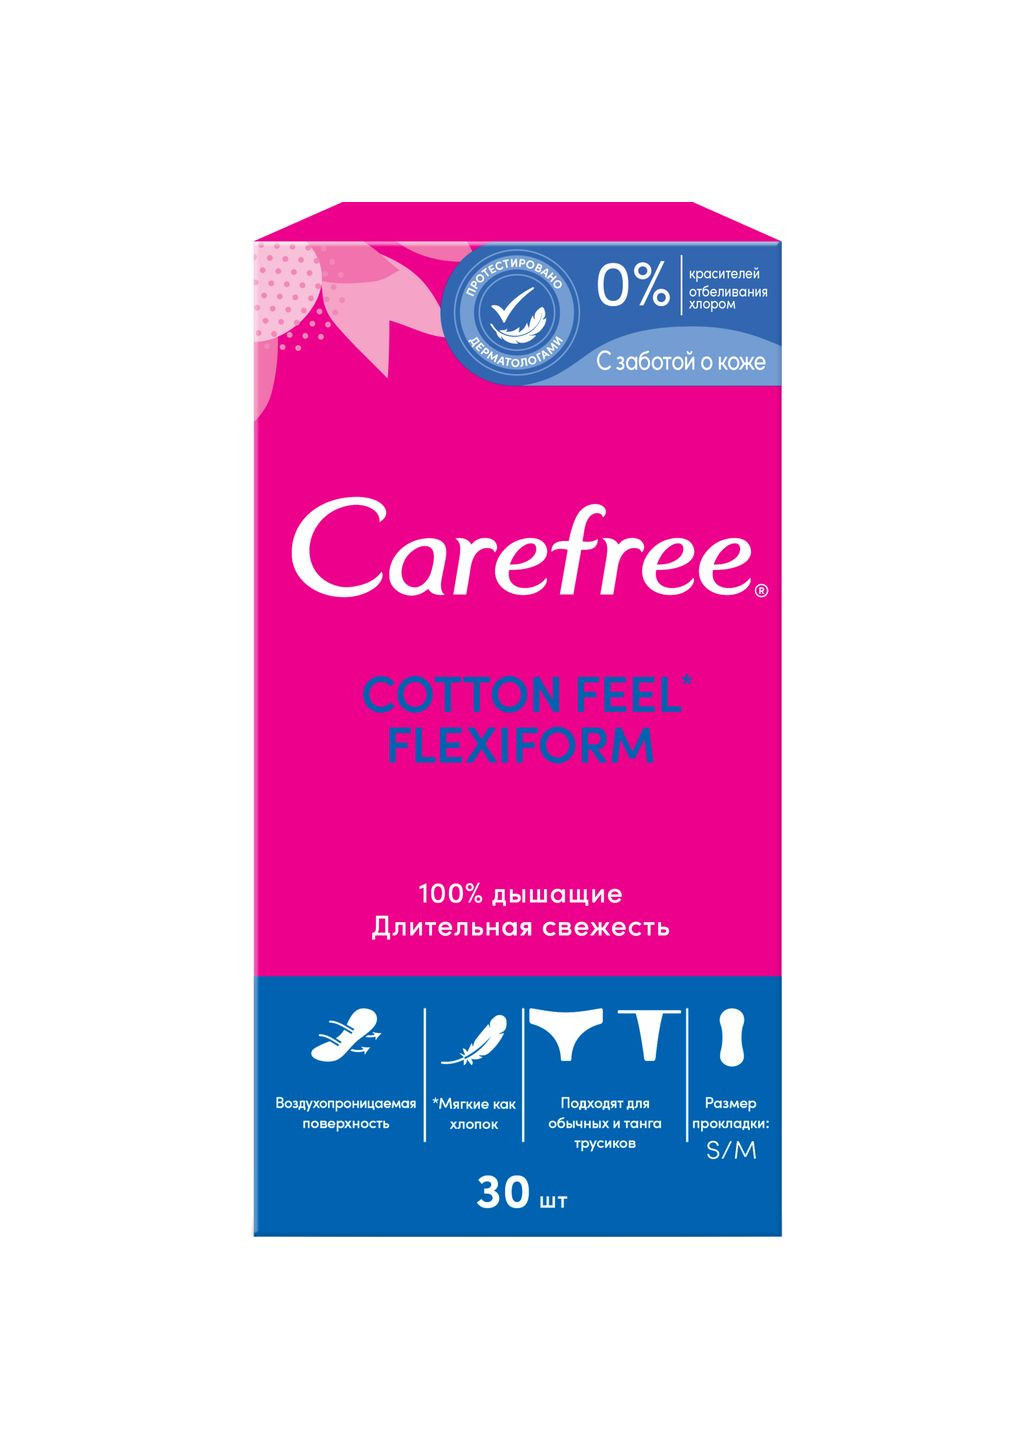 Прокладки Carefree flexi form fresh 30 шт. (268143565)